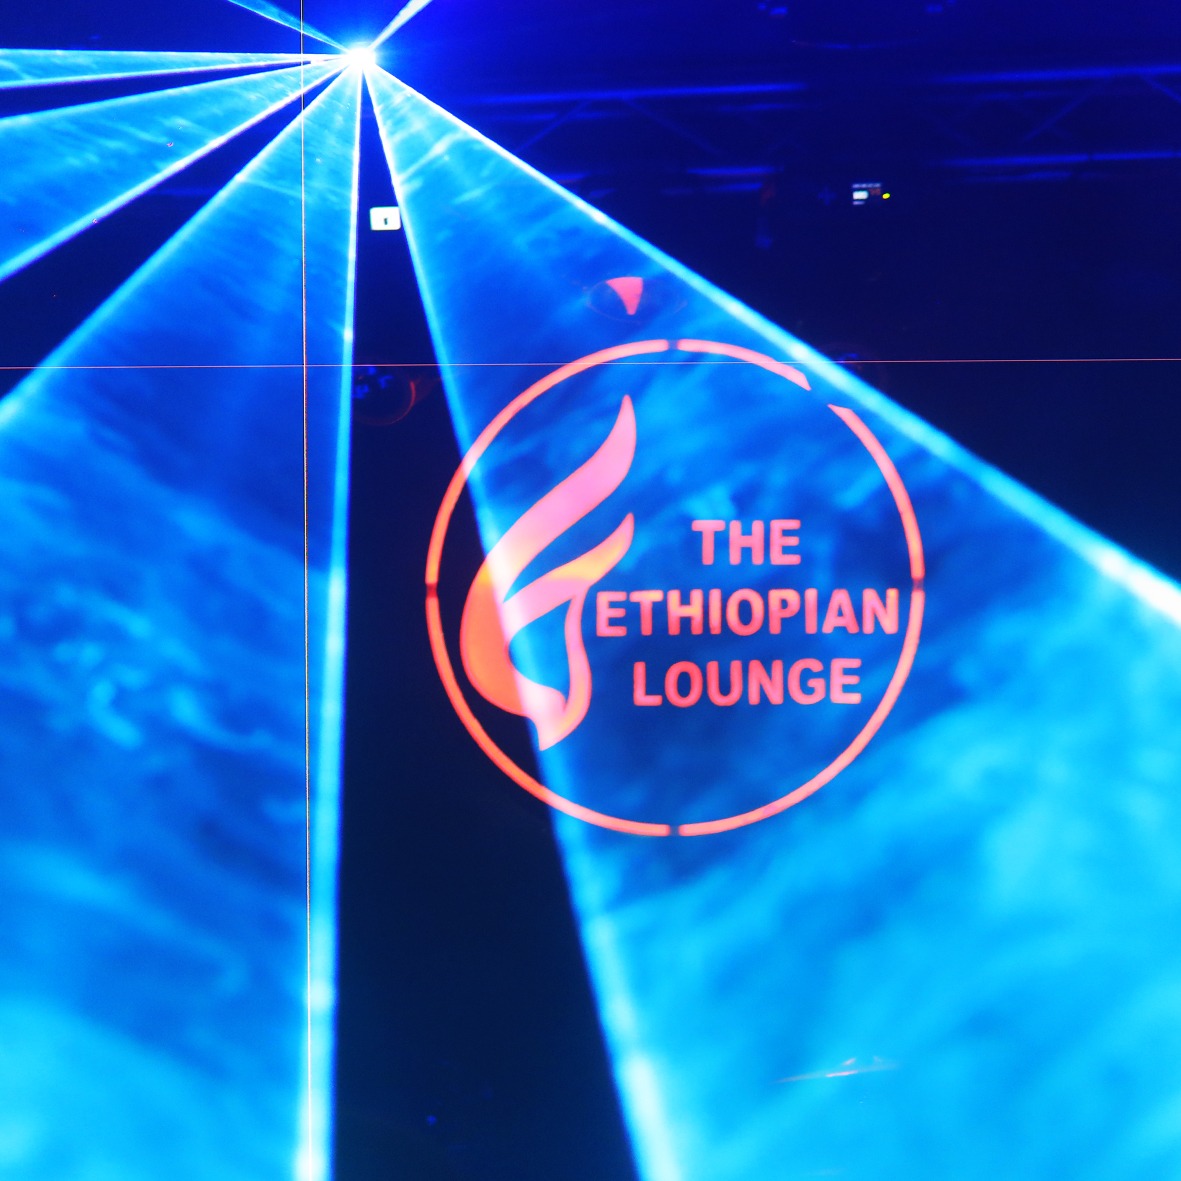 The Ethiopian Lounge